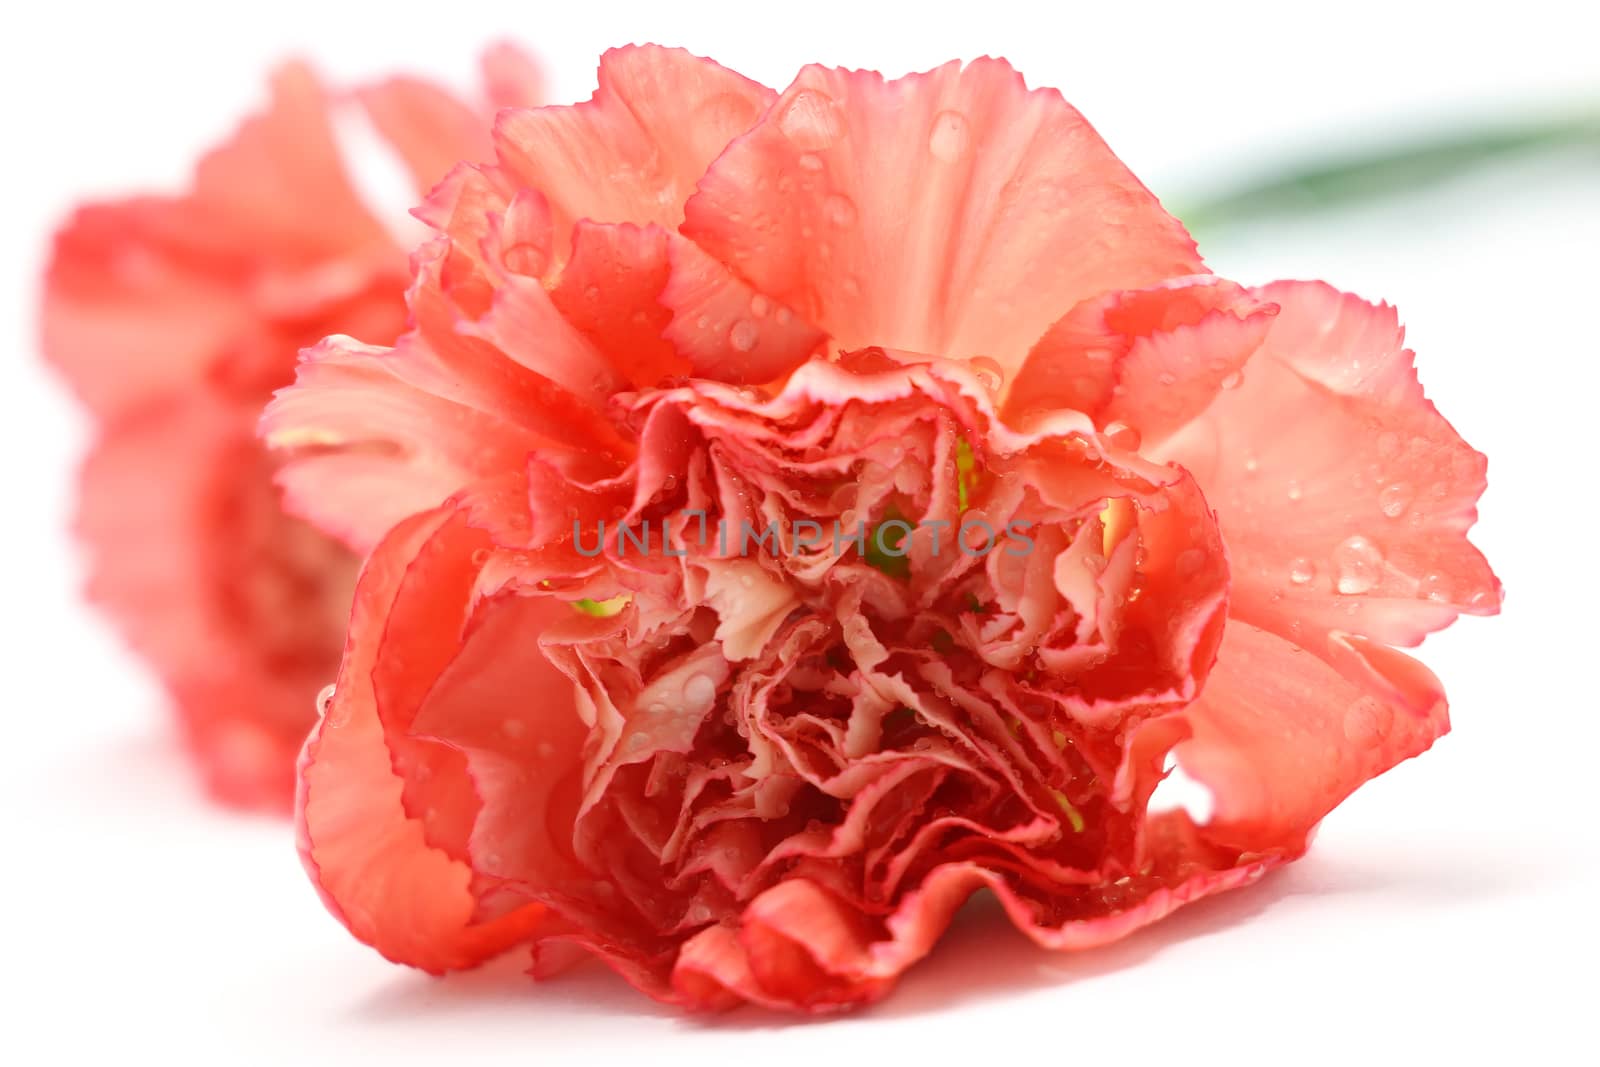 carnation flower by leisuretime70